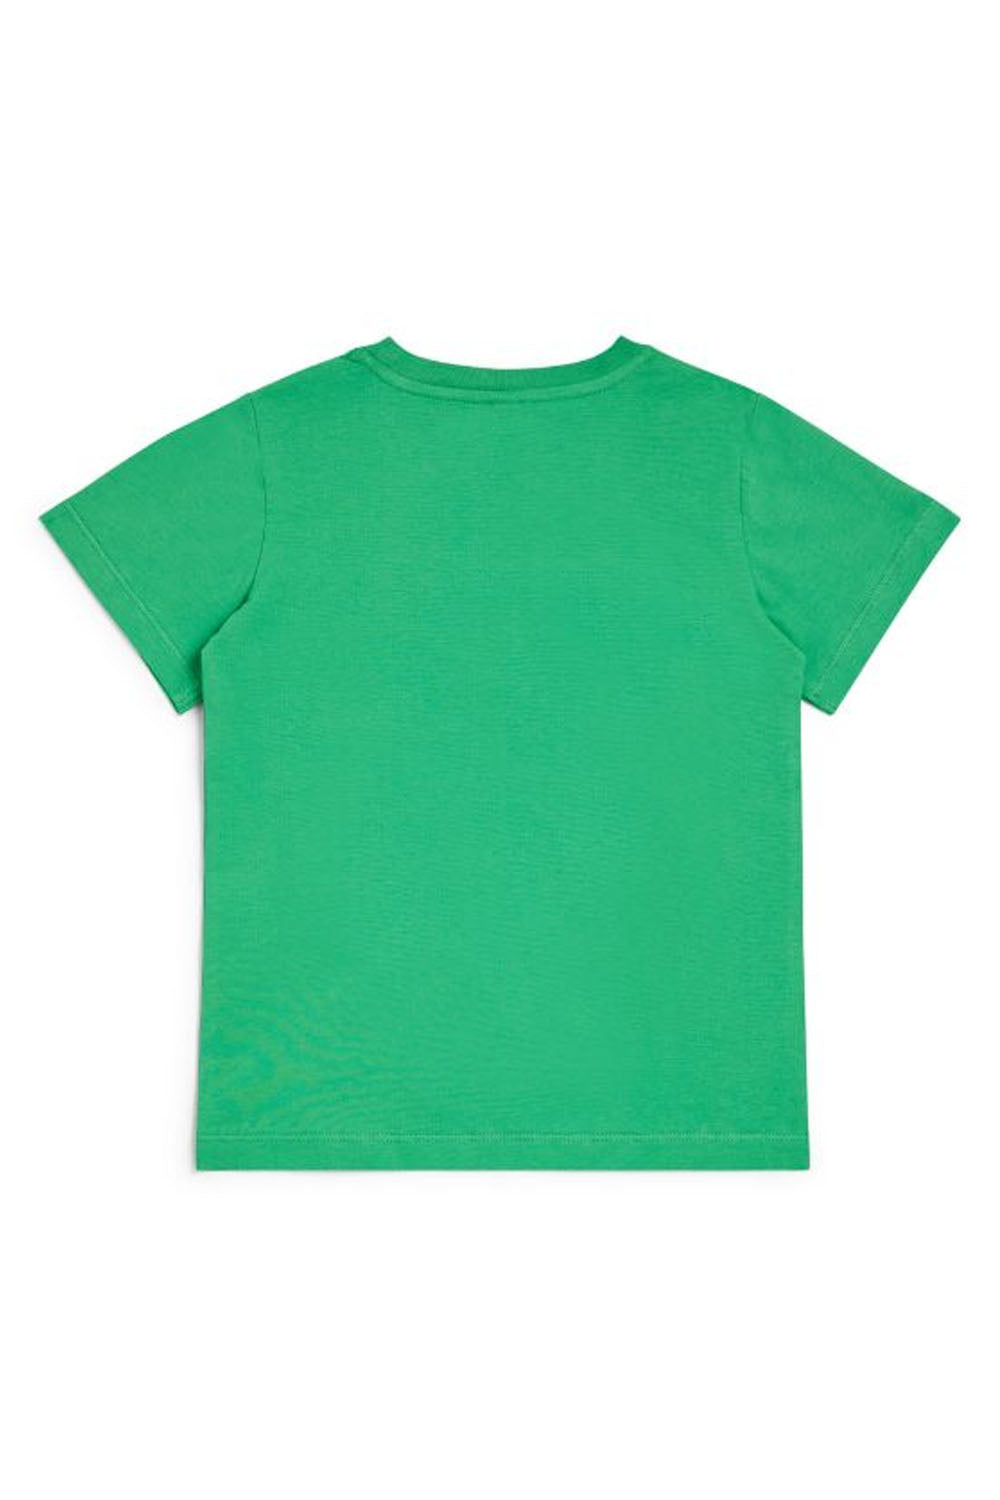 Good Vibes T Shirt for Boys - Maison7